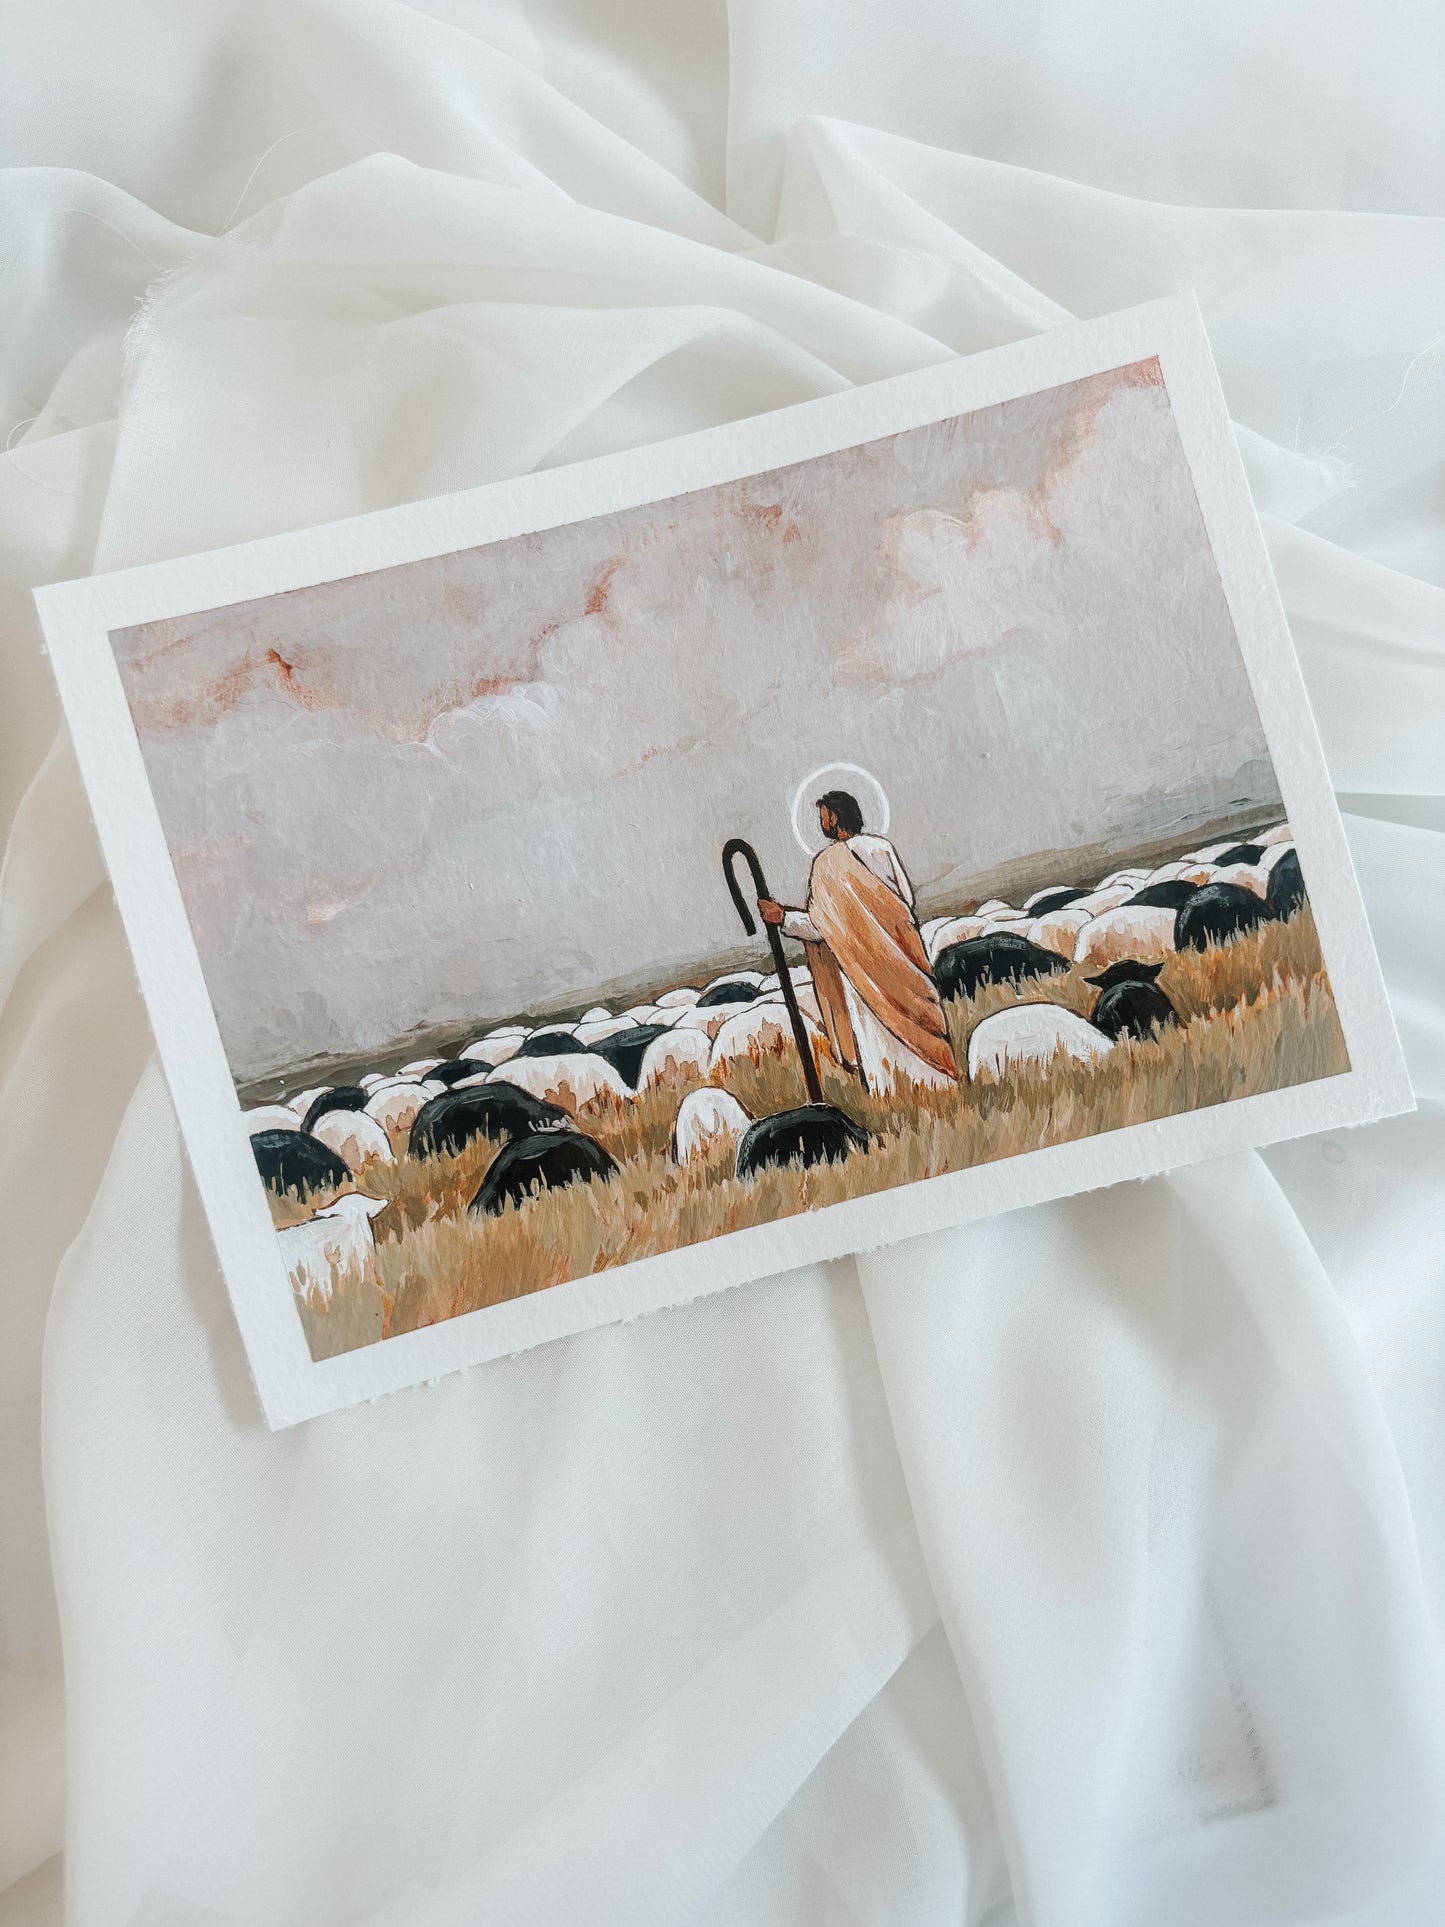 'Our Steadfast Shepherd' 5x7 inch original painting